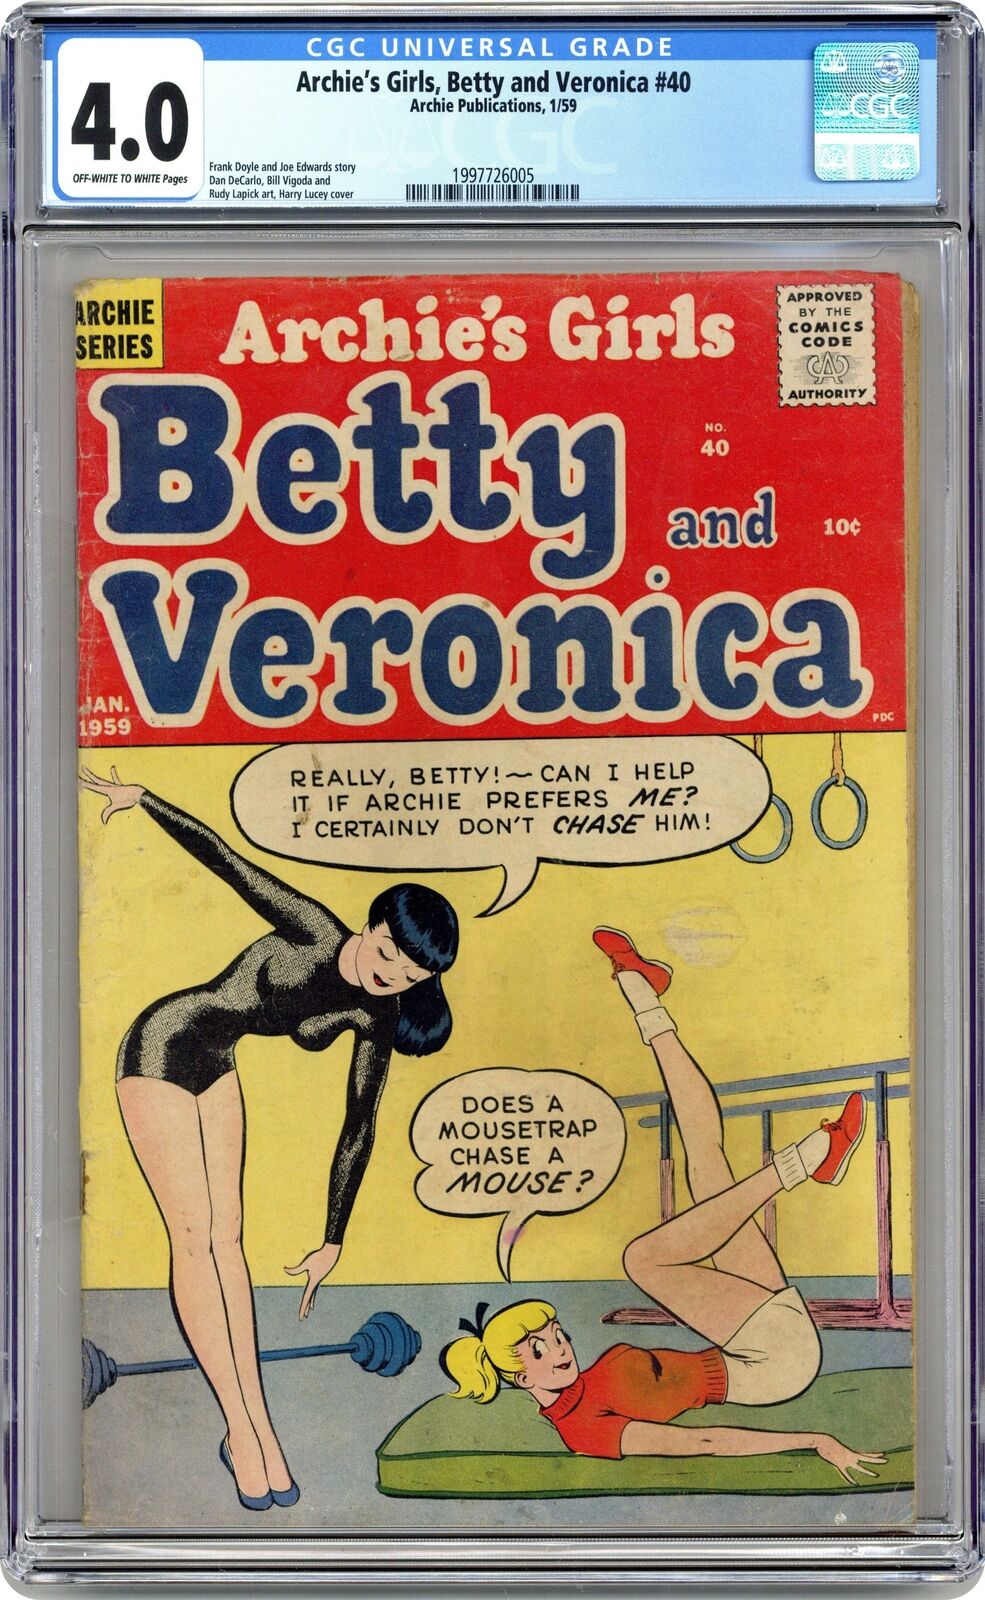 Archie's Girls Betty and Veronica #40 CGC 4.0 1959 1997726005